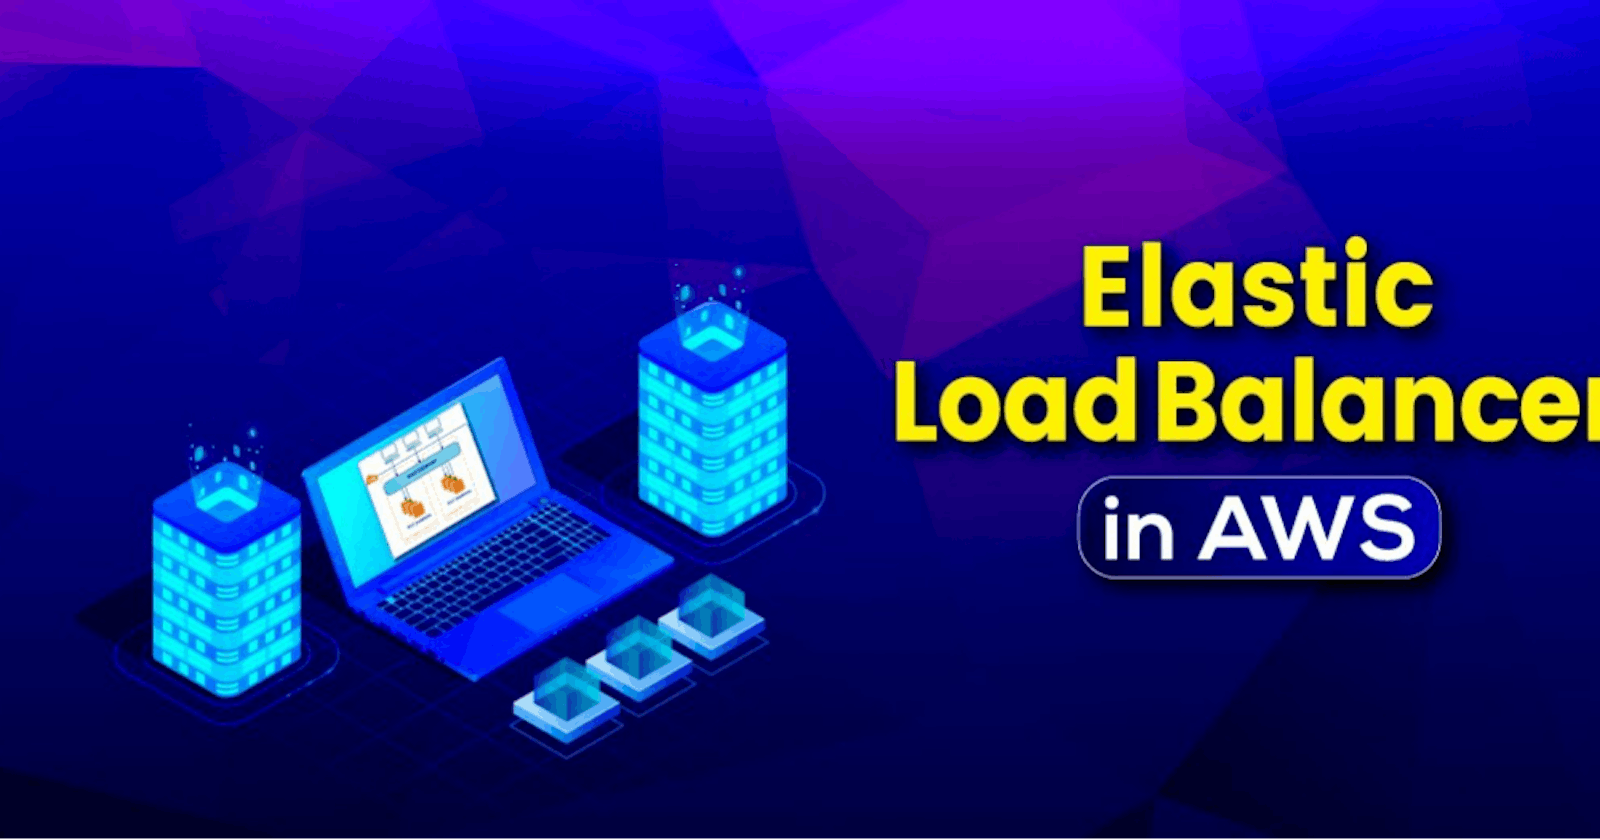 Create an Application Load Balancer - Elastic Load Balancing  Using AWS EC2 Instance